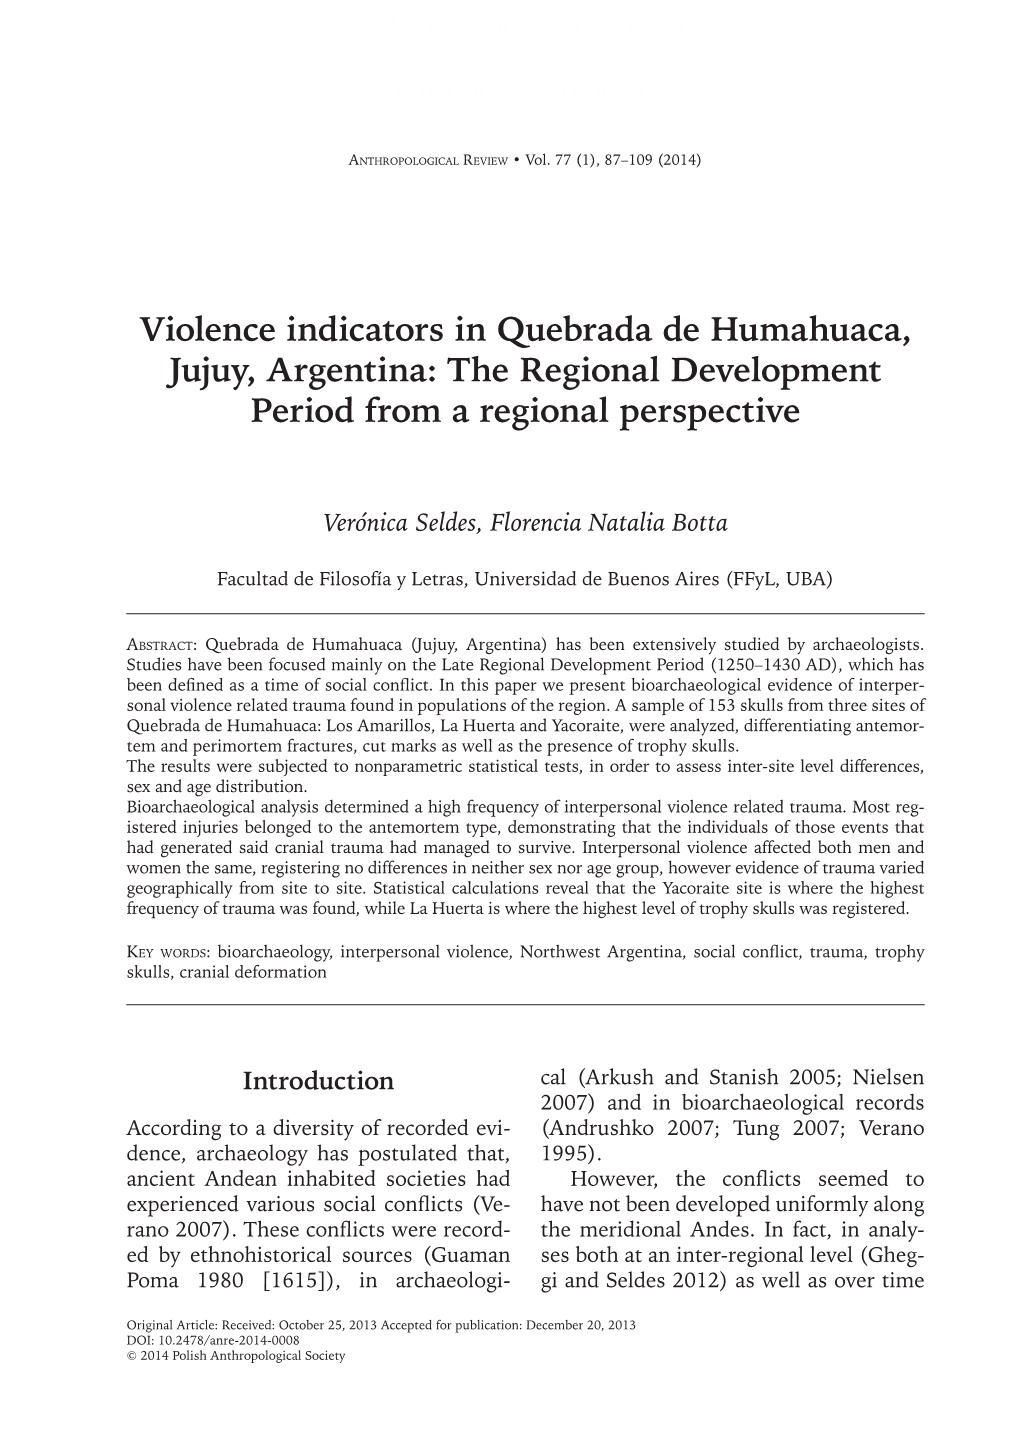 Violence Indicators in Quebrada De Humahuaca, Jujuy, Argentina: the Regional Development Period from a Regional Perspective